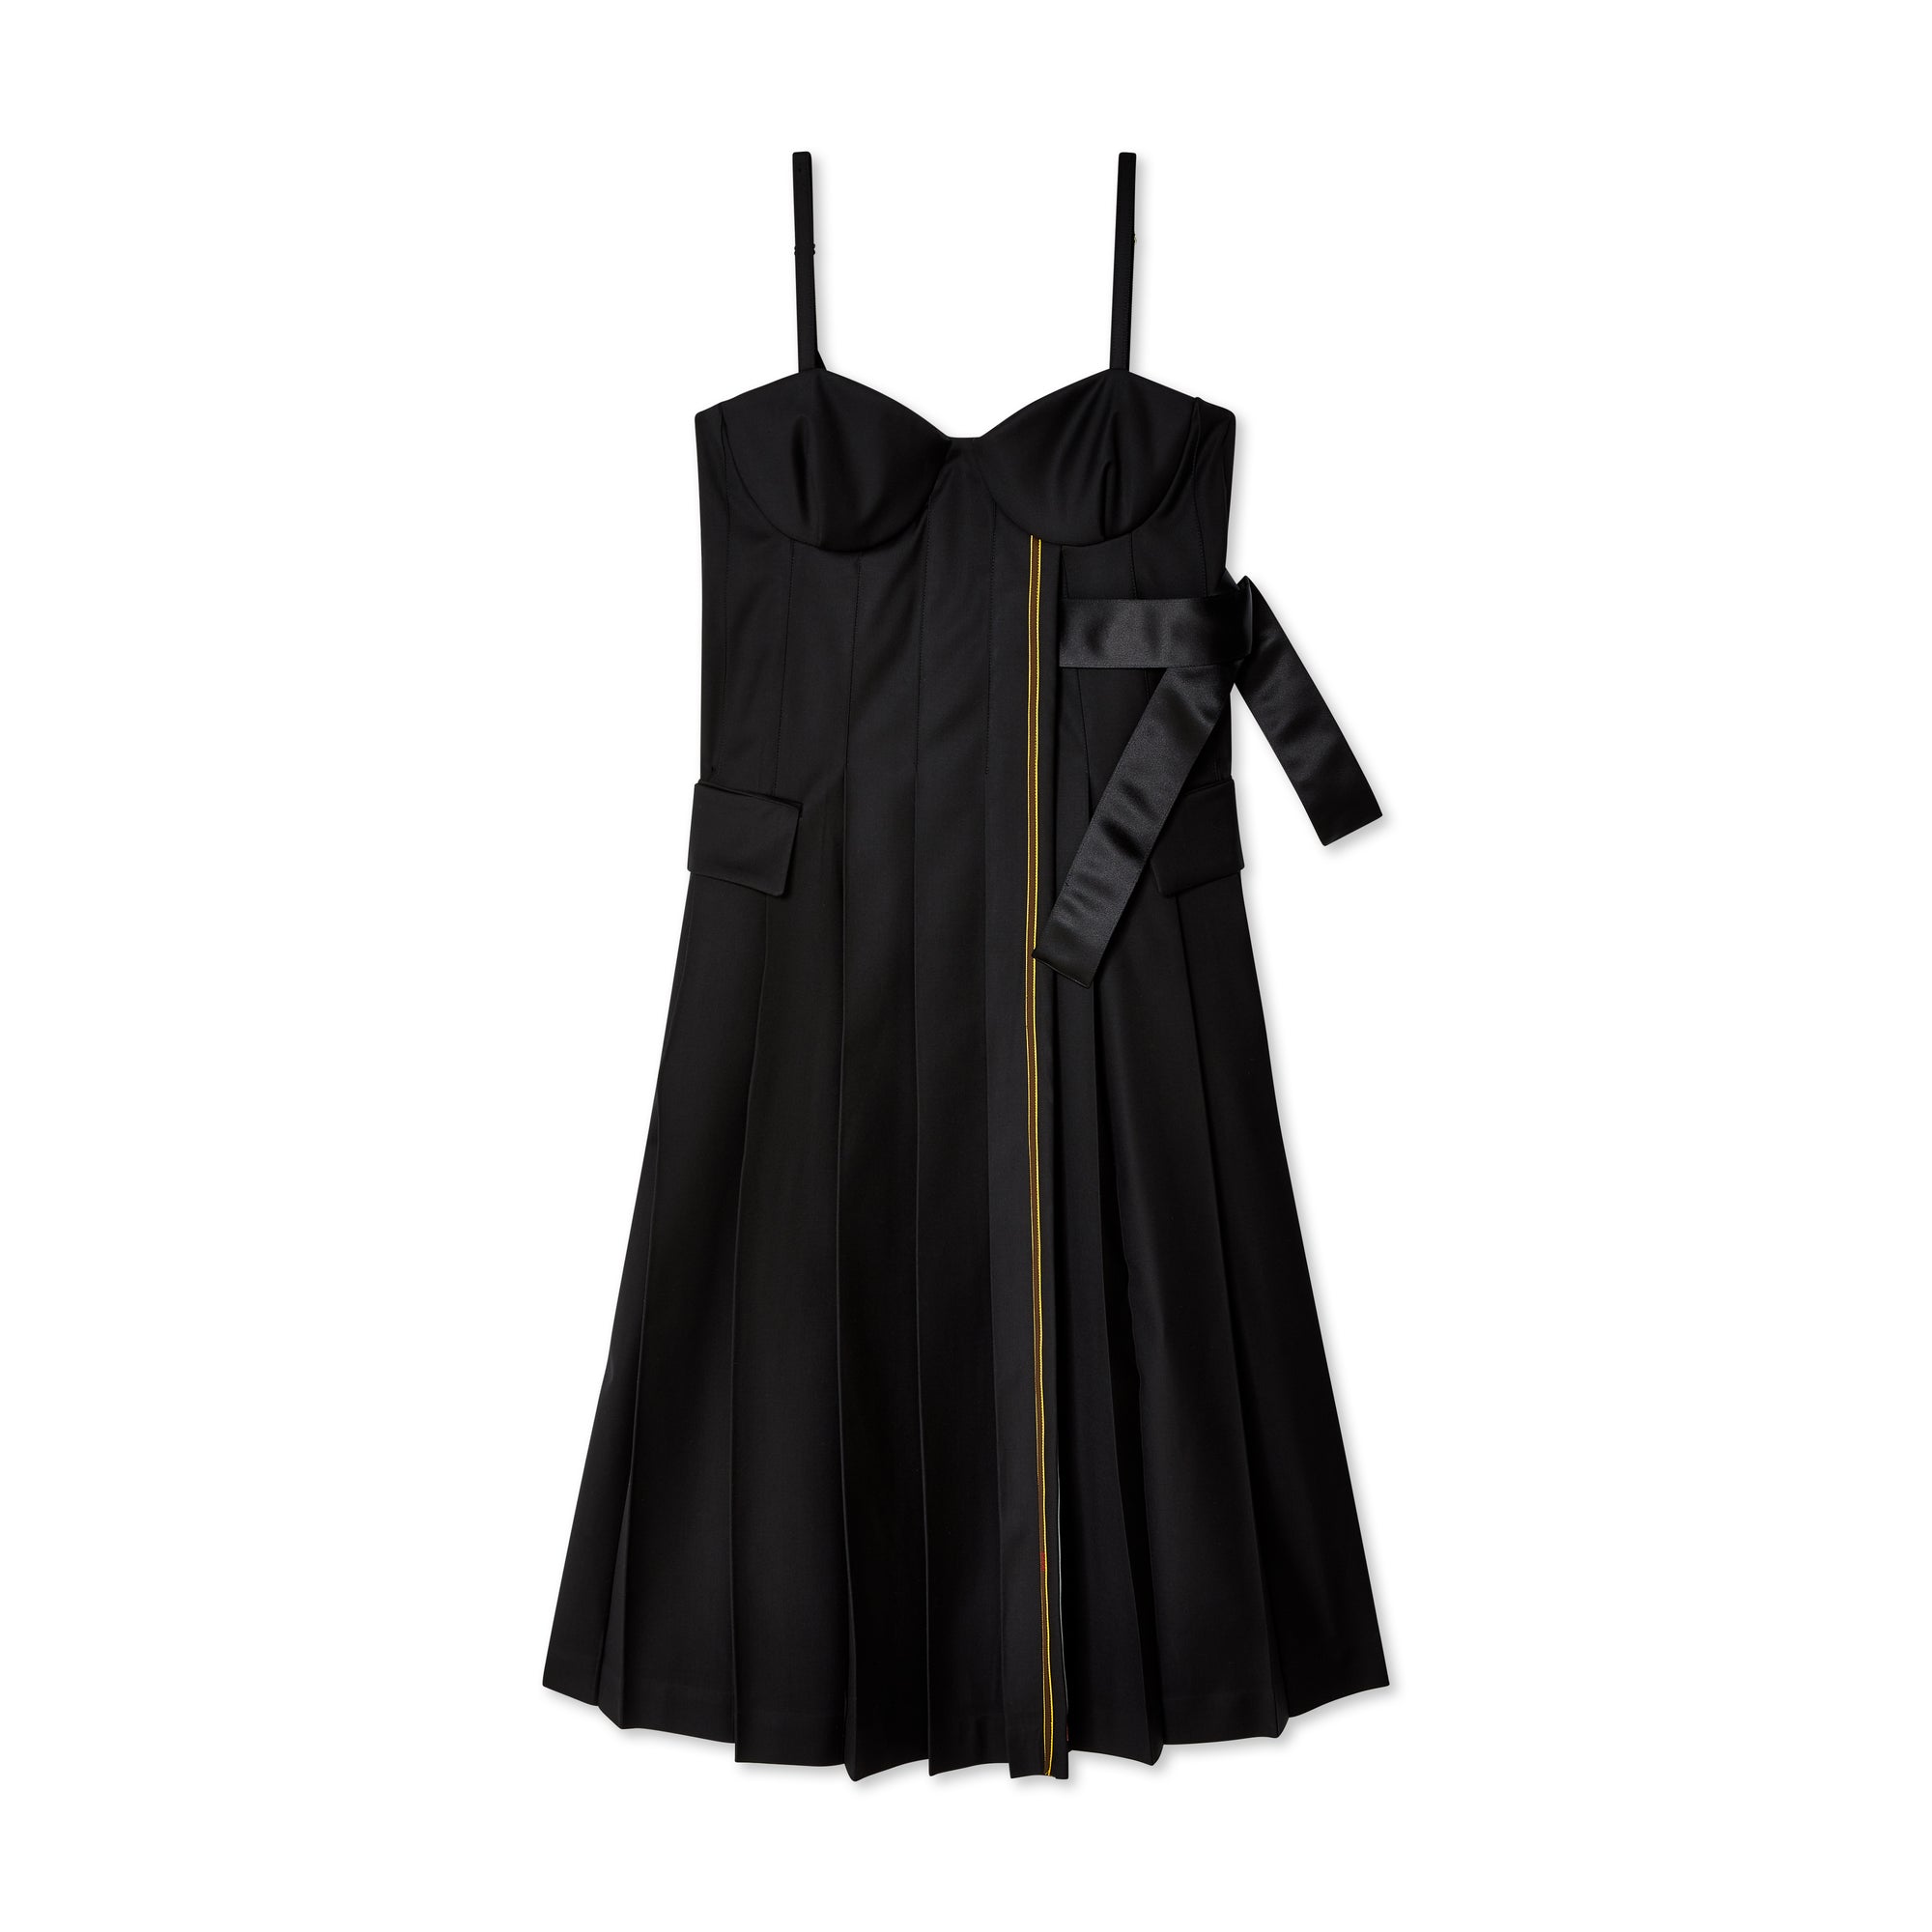 sacai - Women's Suiting Dress - (Black) view 2